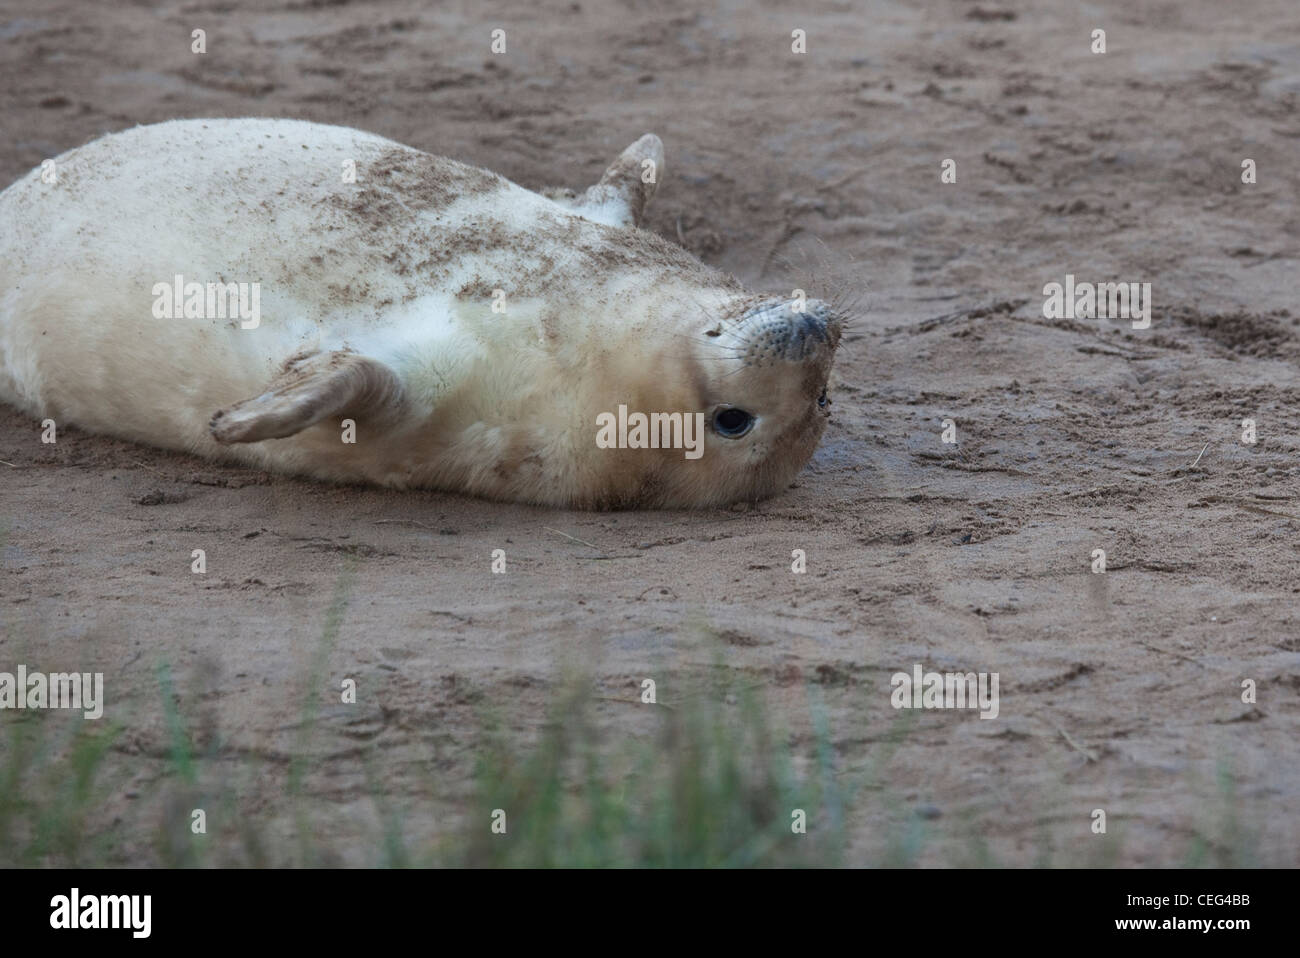 Donna Nook seal Stock Photo